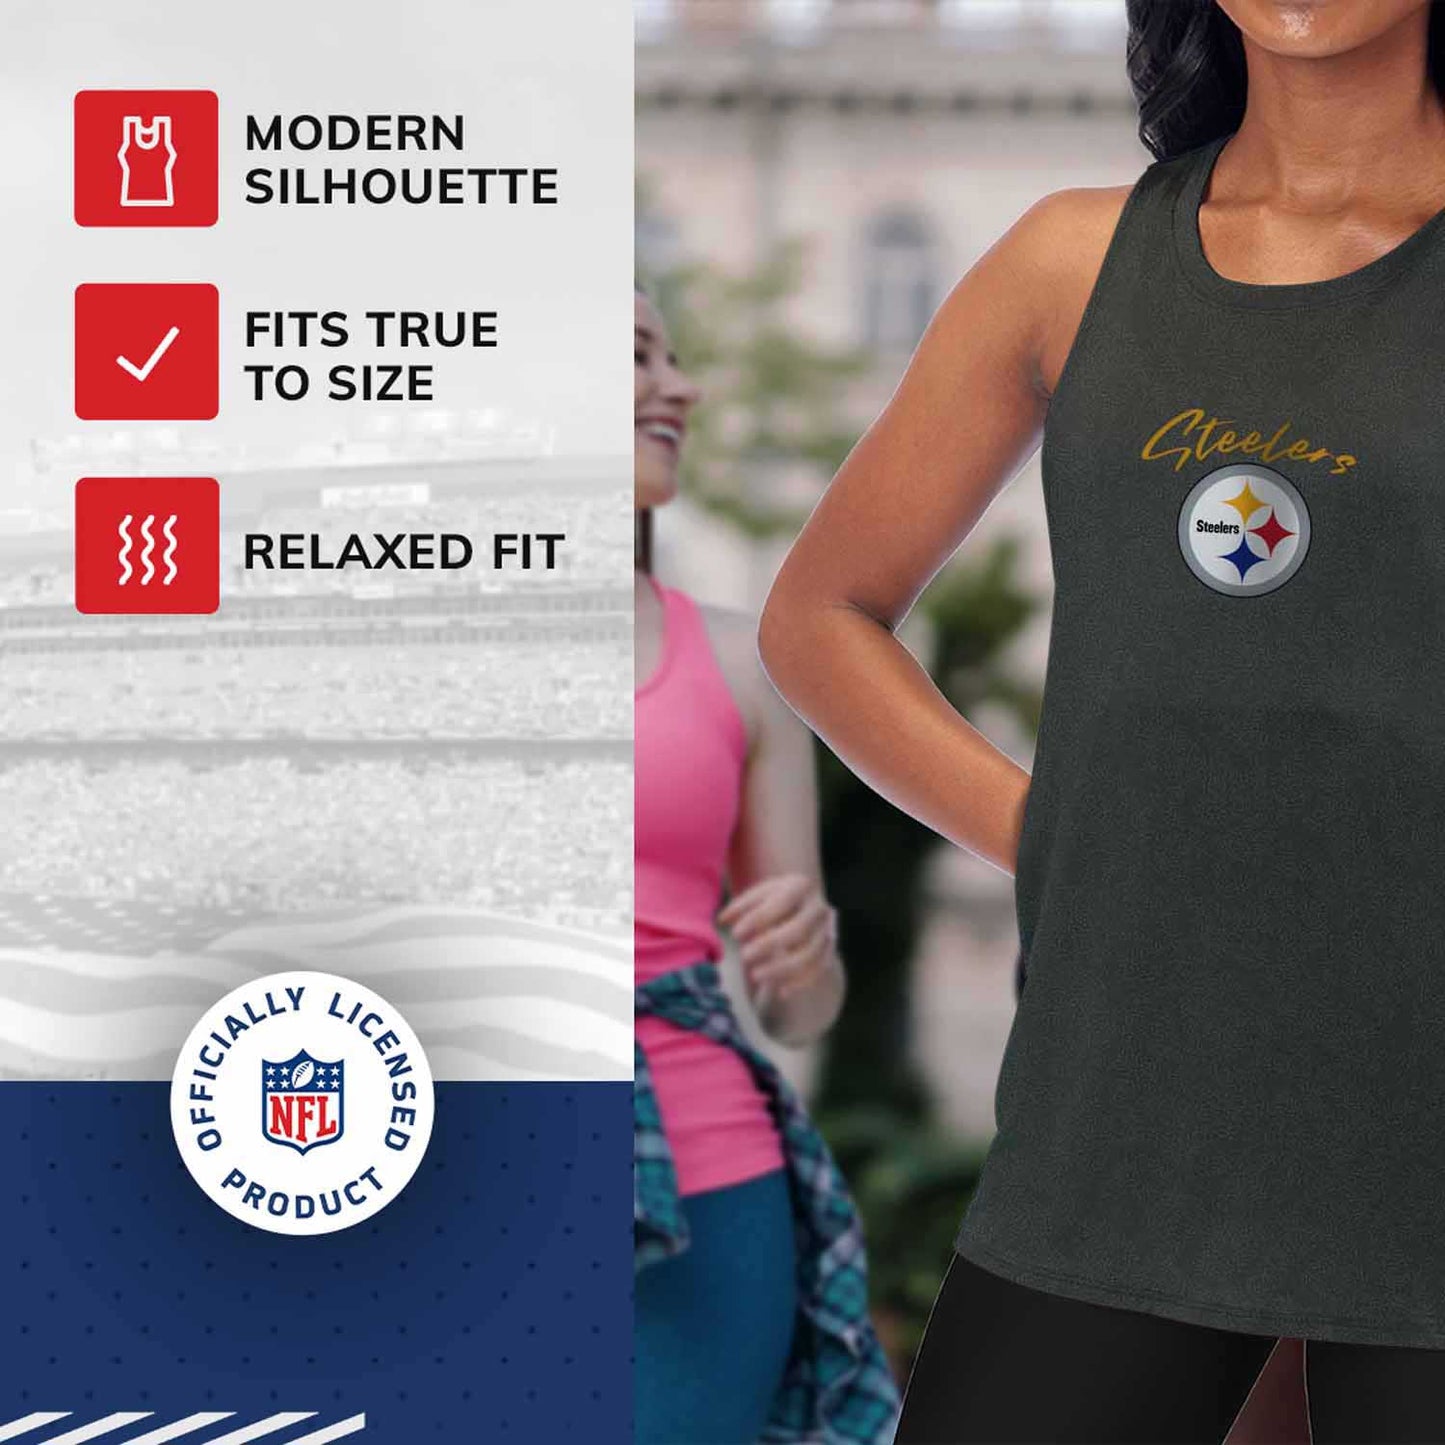 Pittsburgh Steelers NFL Women's Muscle Tank - Black